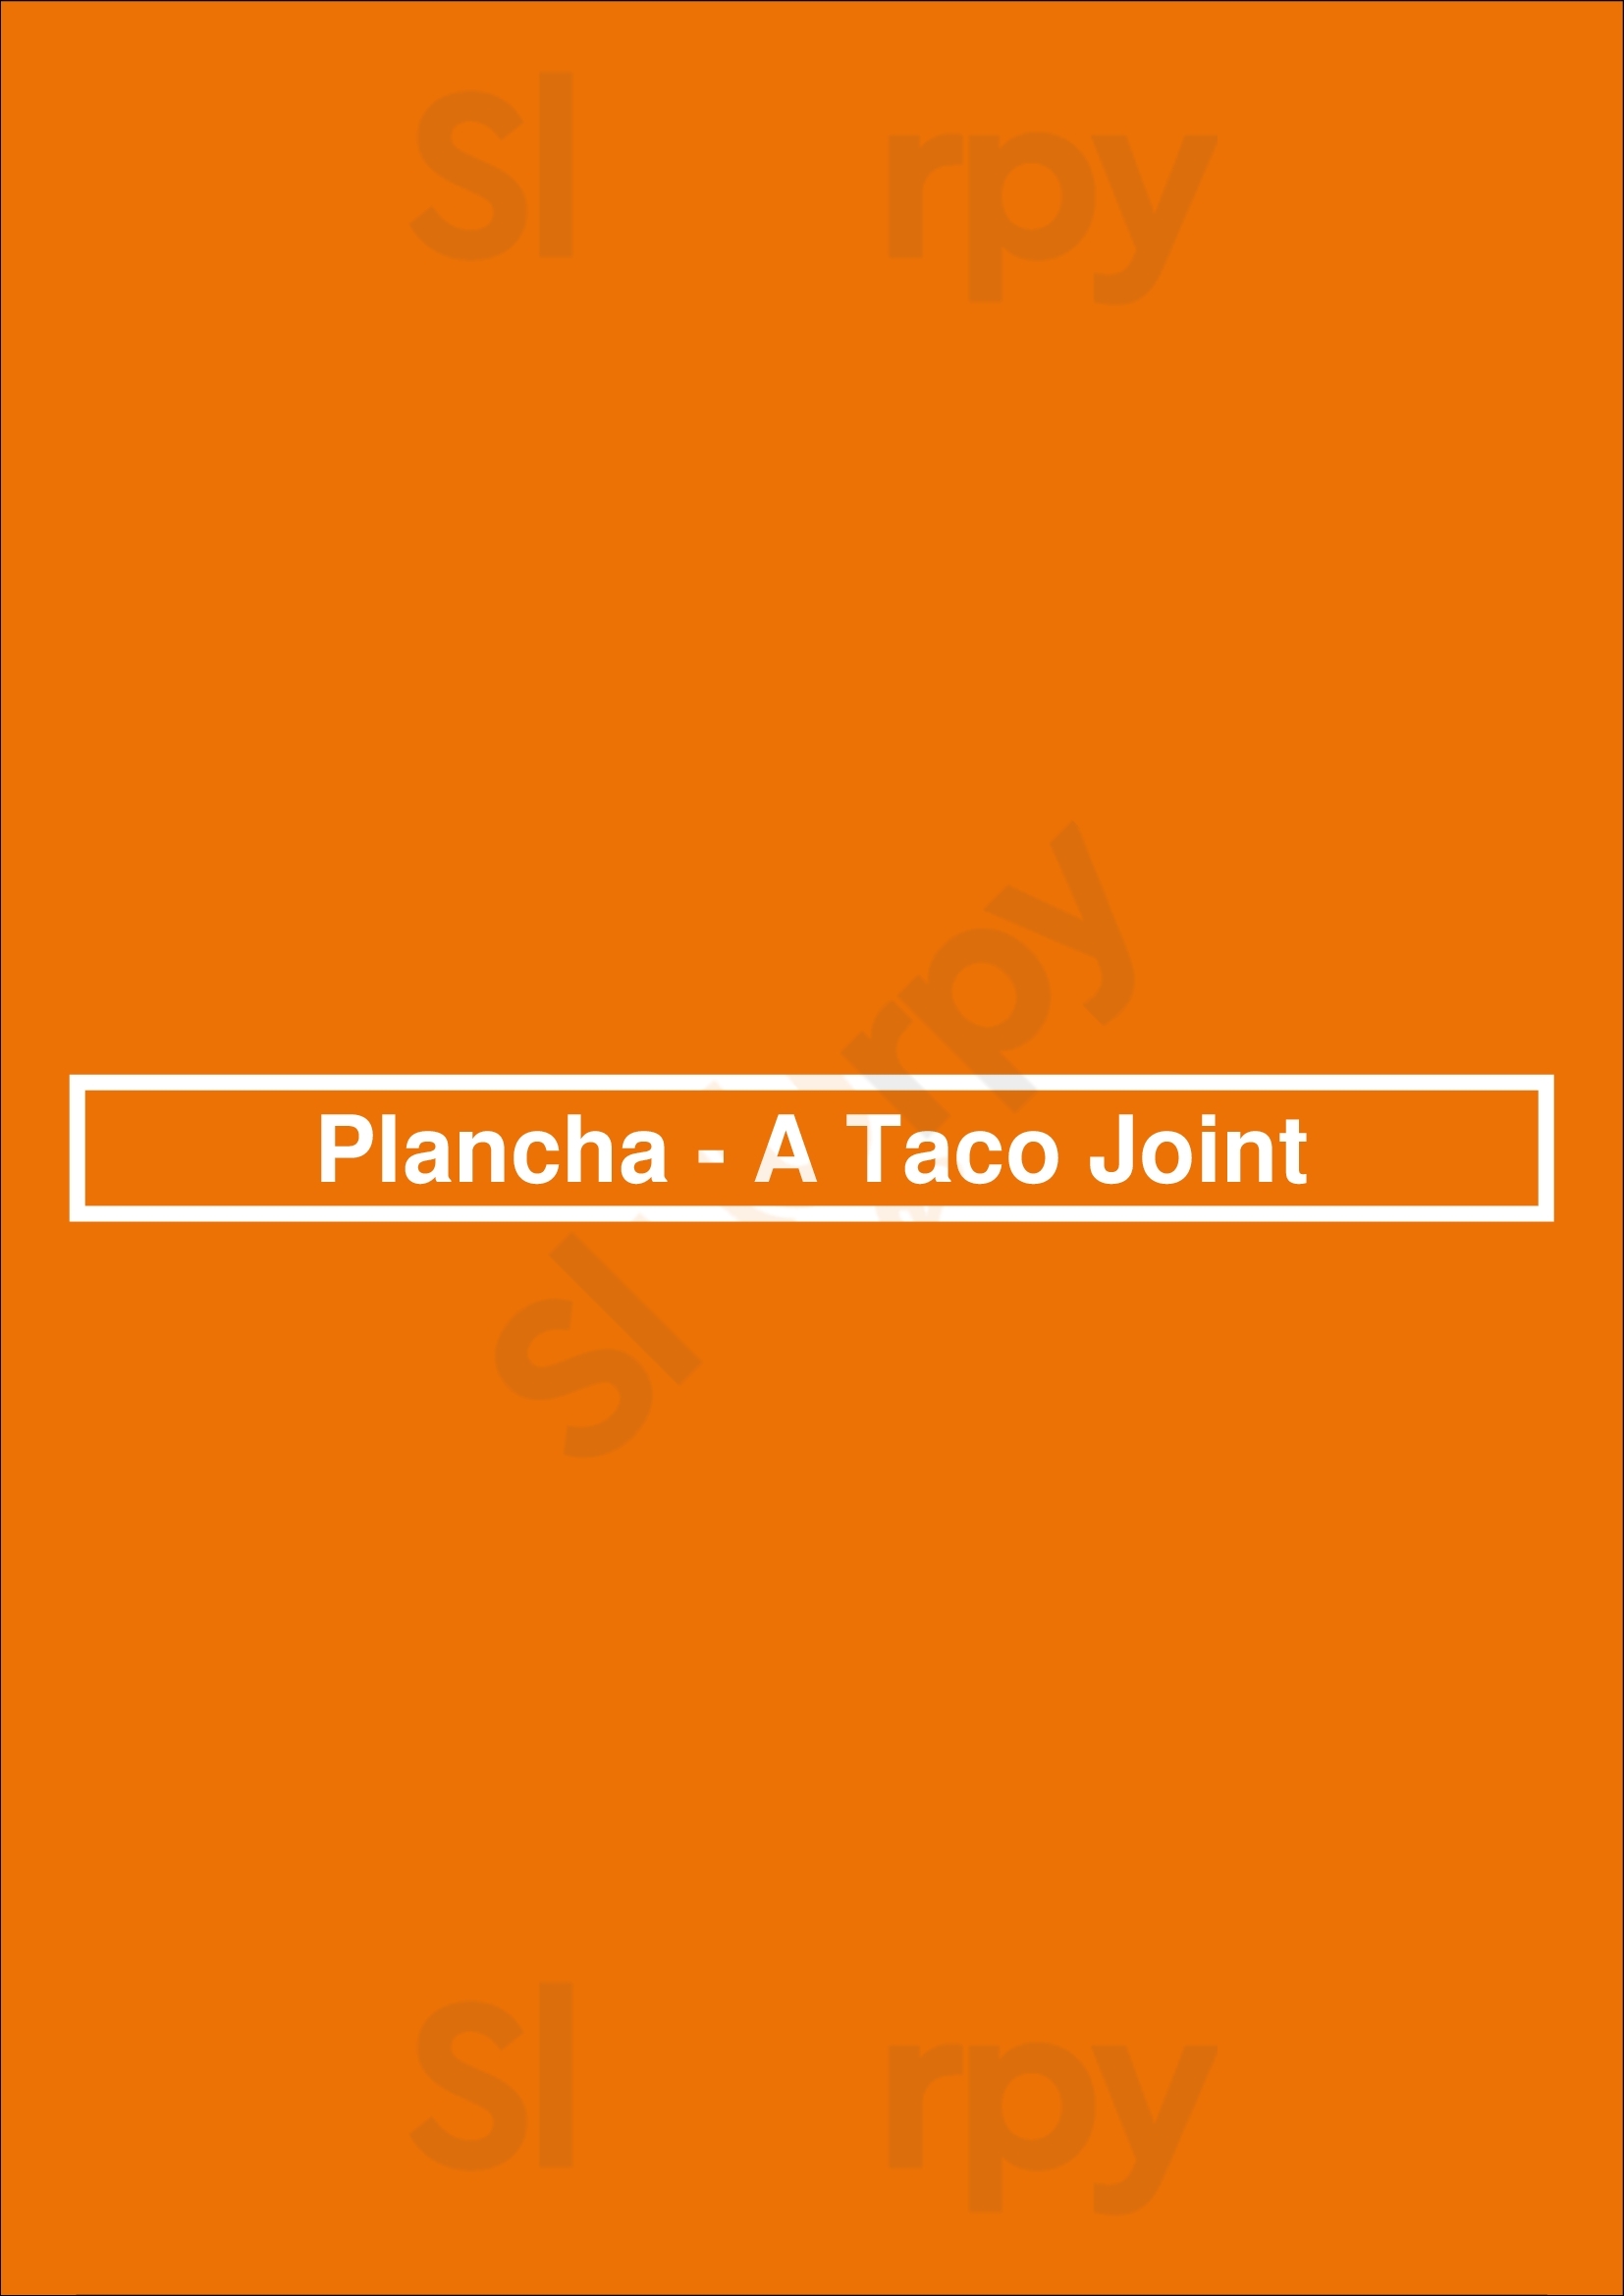 Plancha - A Taco Joint Los Angeles Menu - 1